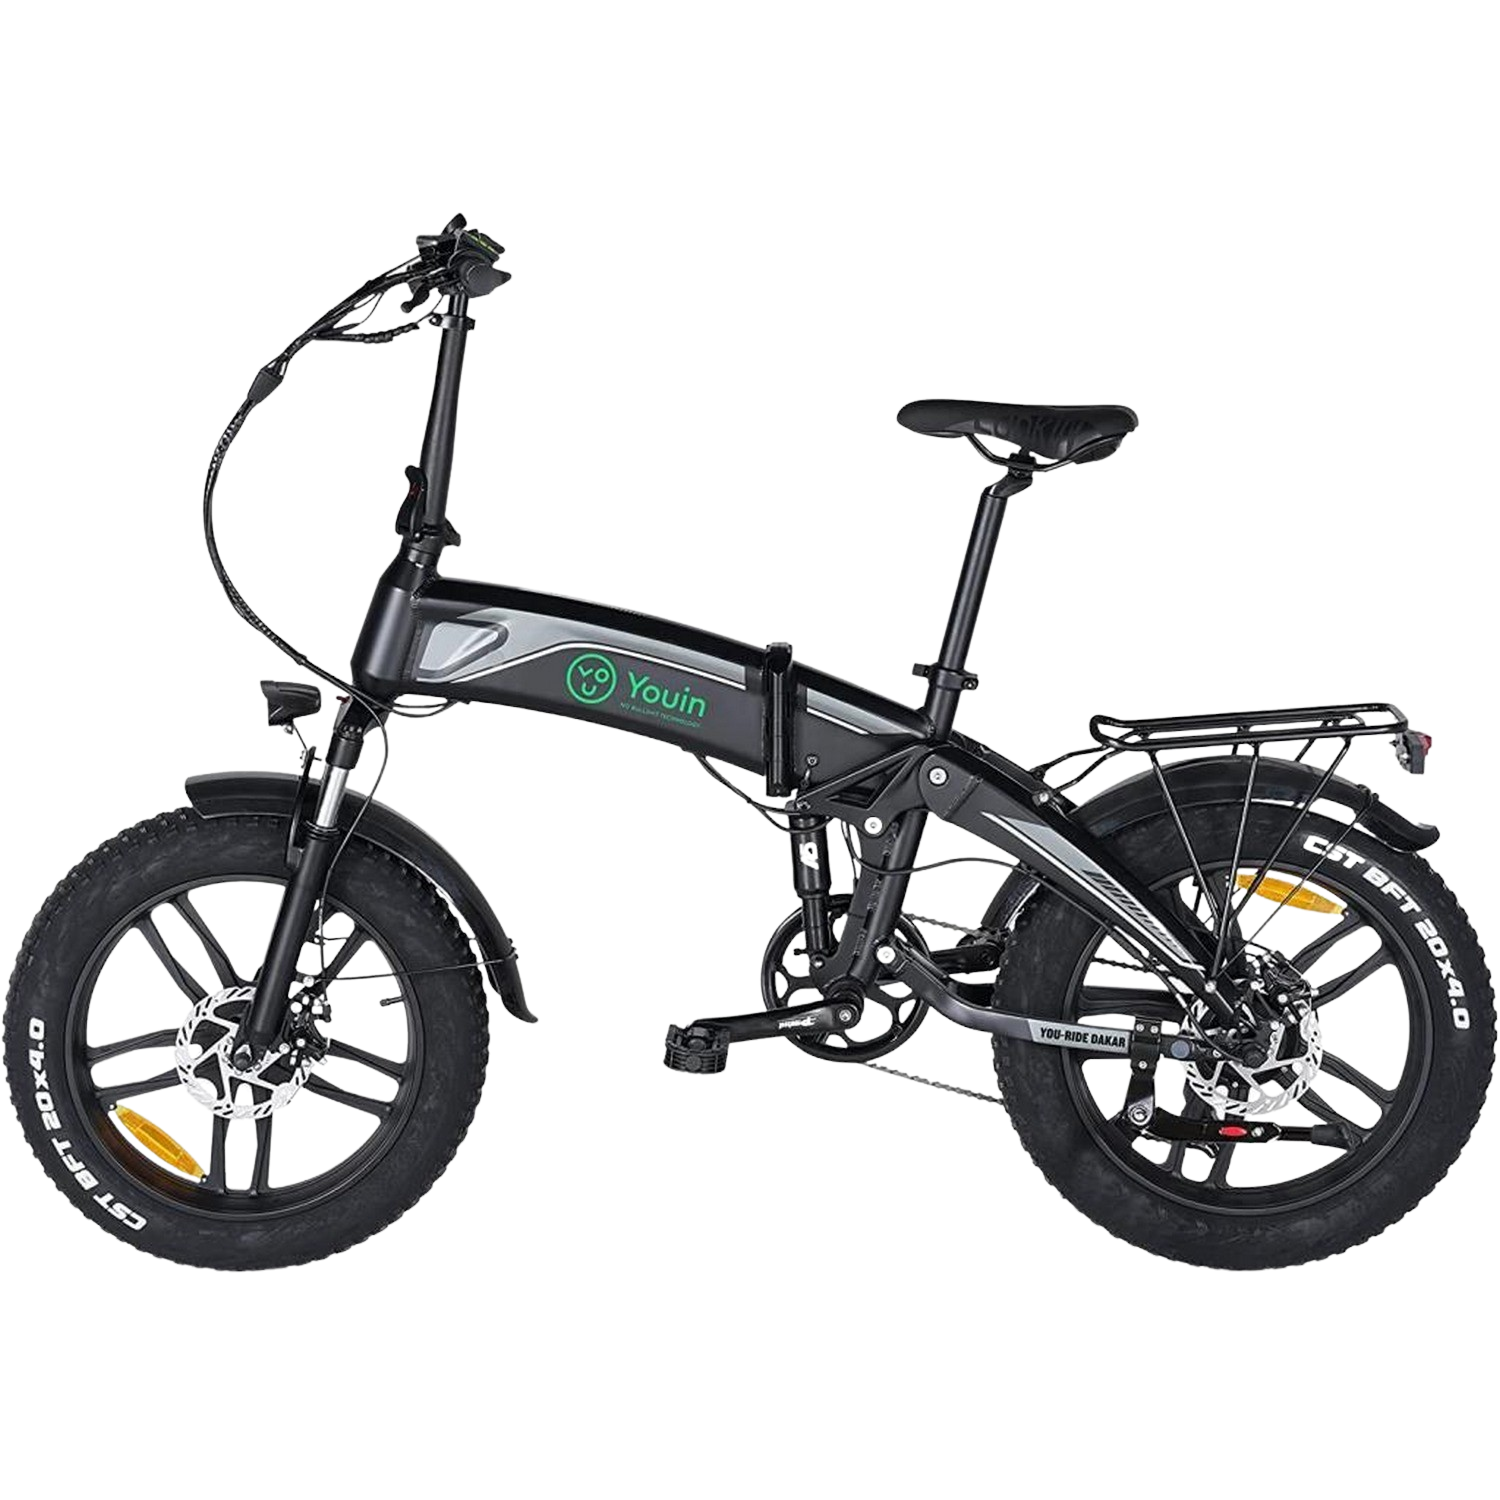 Youin Youride Dakar negro bicicleta 250w plegable ruedas fat 20 batería integrada autonomía hasta 45 km cambio shiman ride bk1400g 7 250 25 20´´